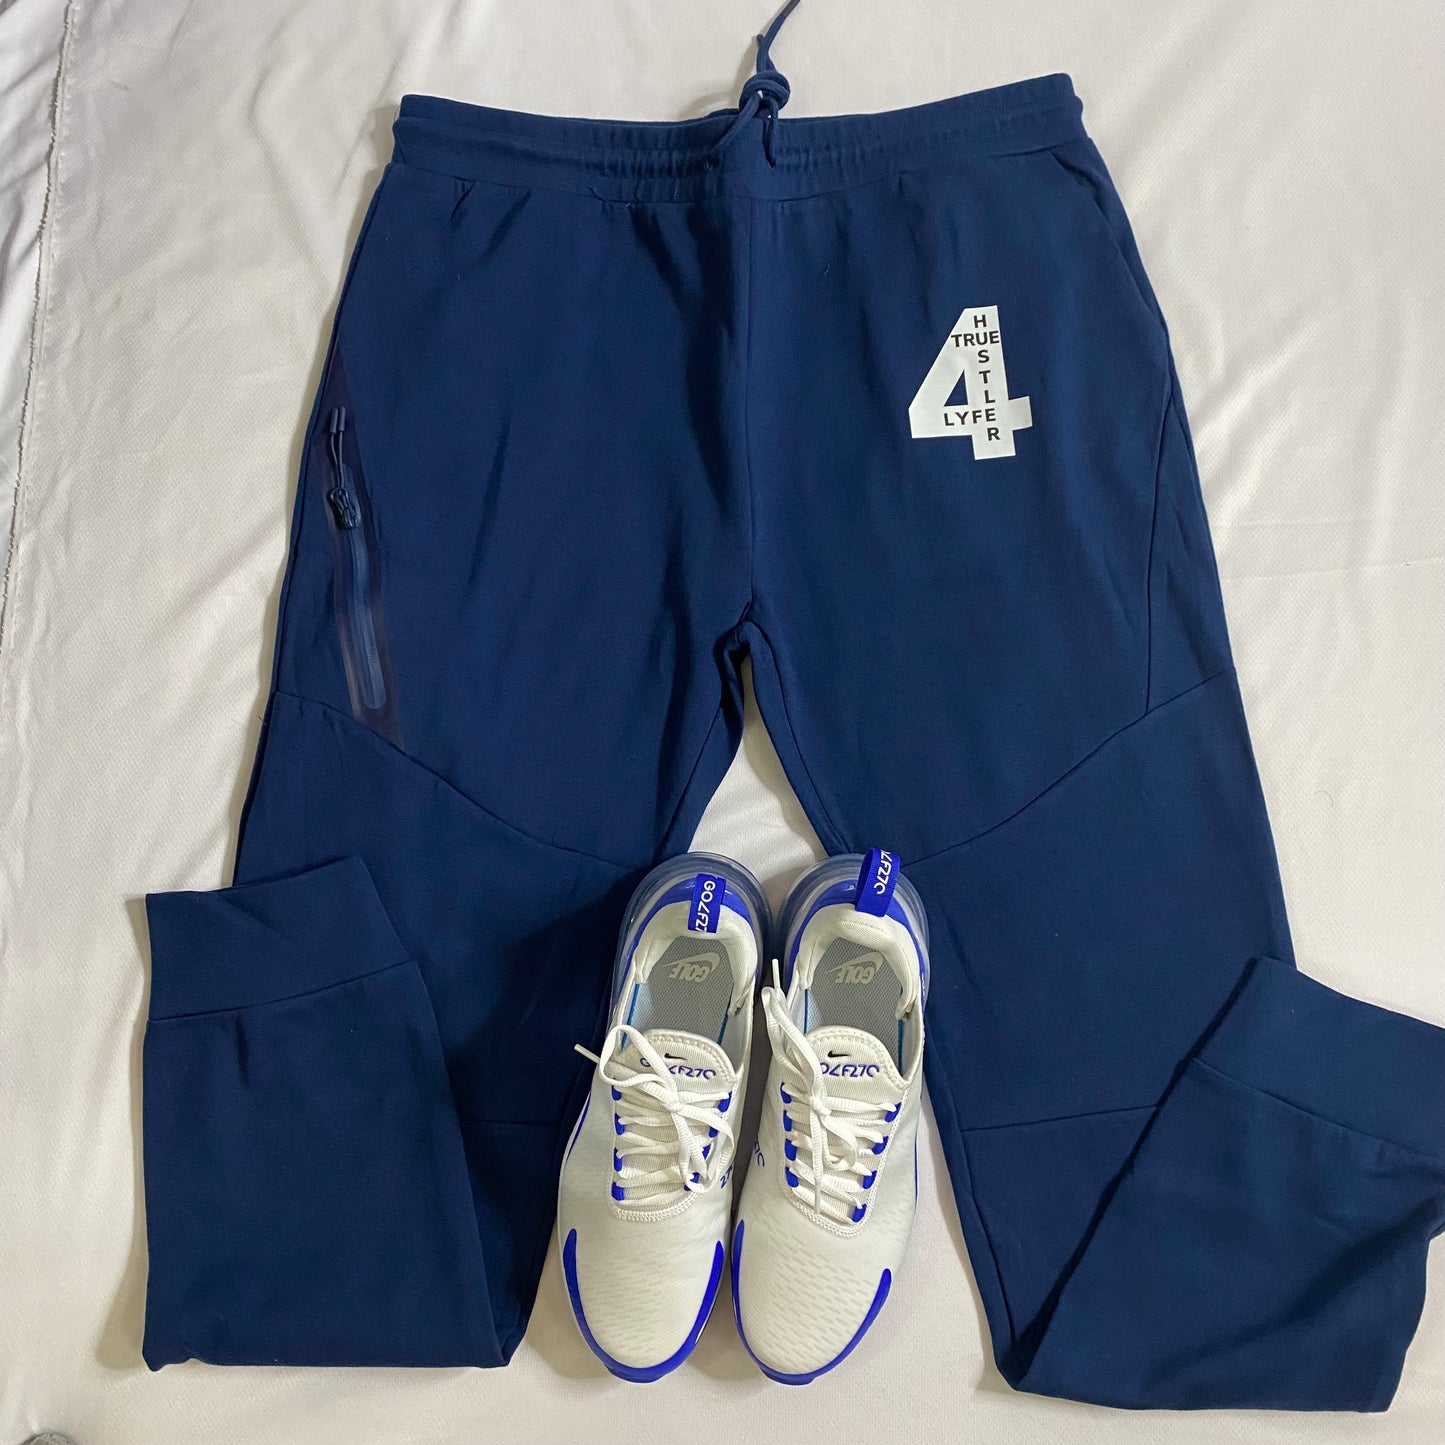 True Hustler 4 Lyfe Blue and White #4 Tech 2 Piece Jogging Suit (Unisex)